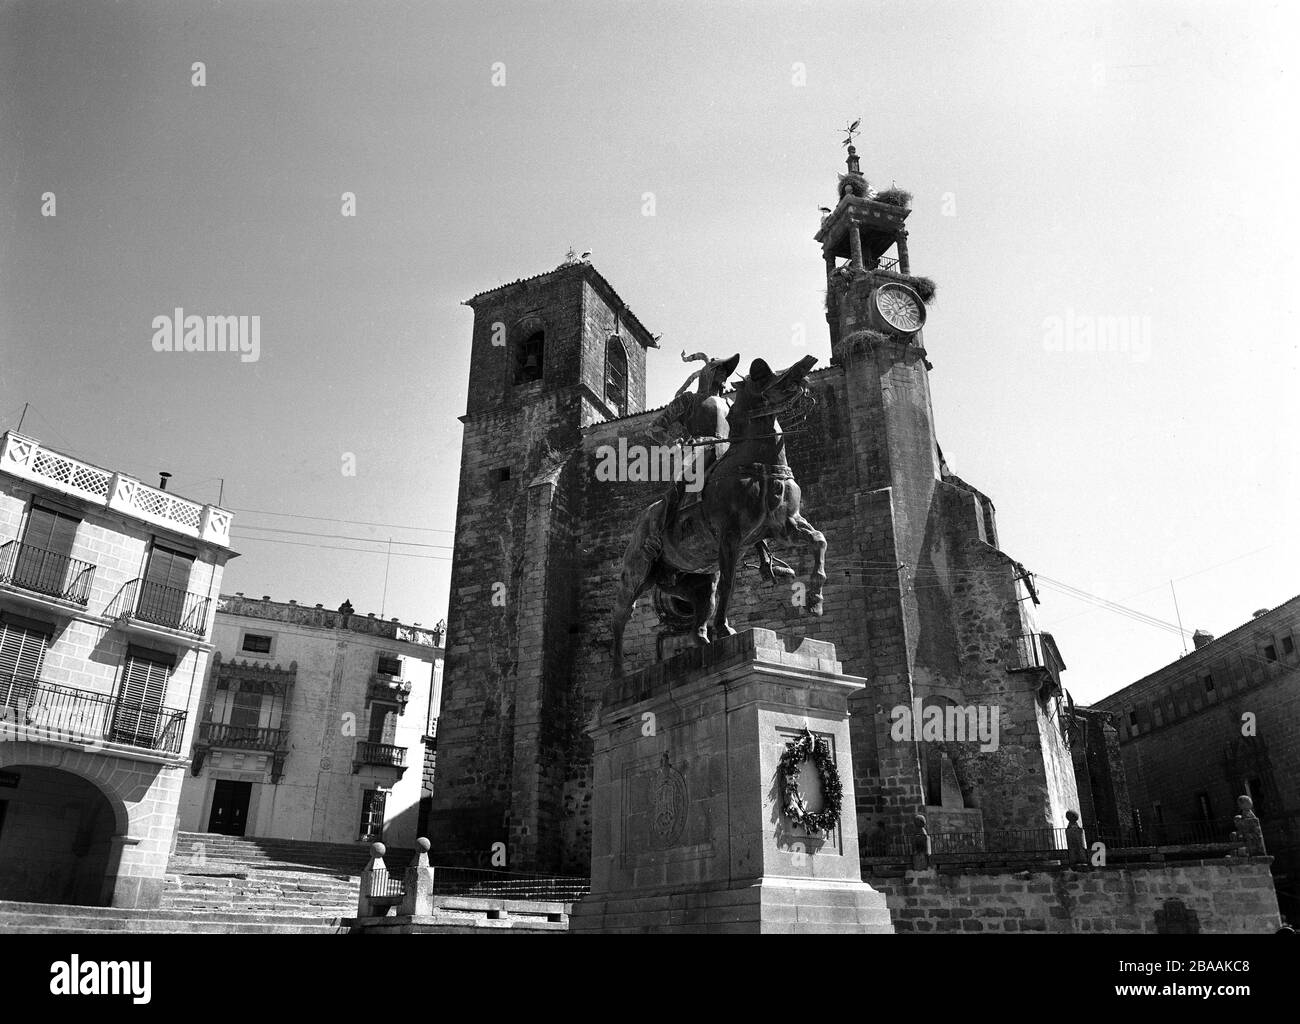 Francisco pizarro Black and White Stock Photos & Images - Alamy